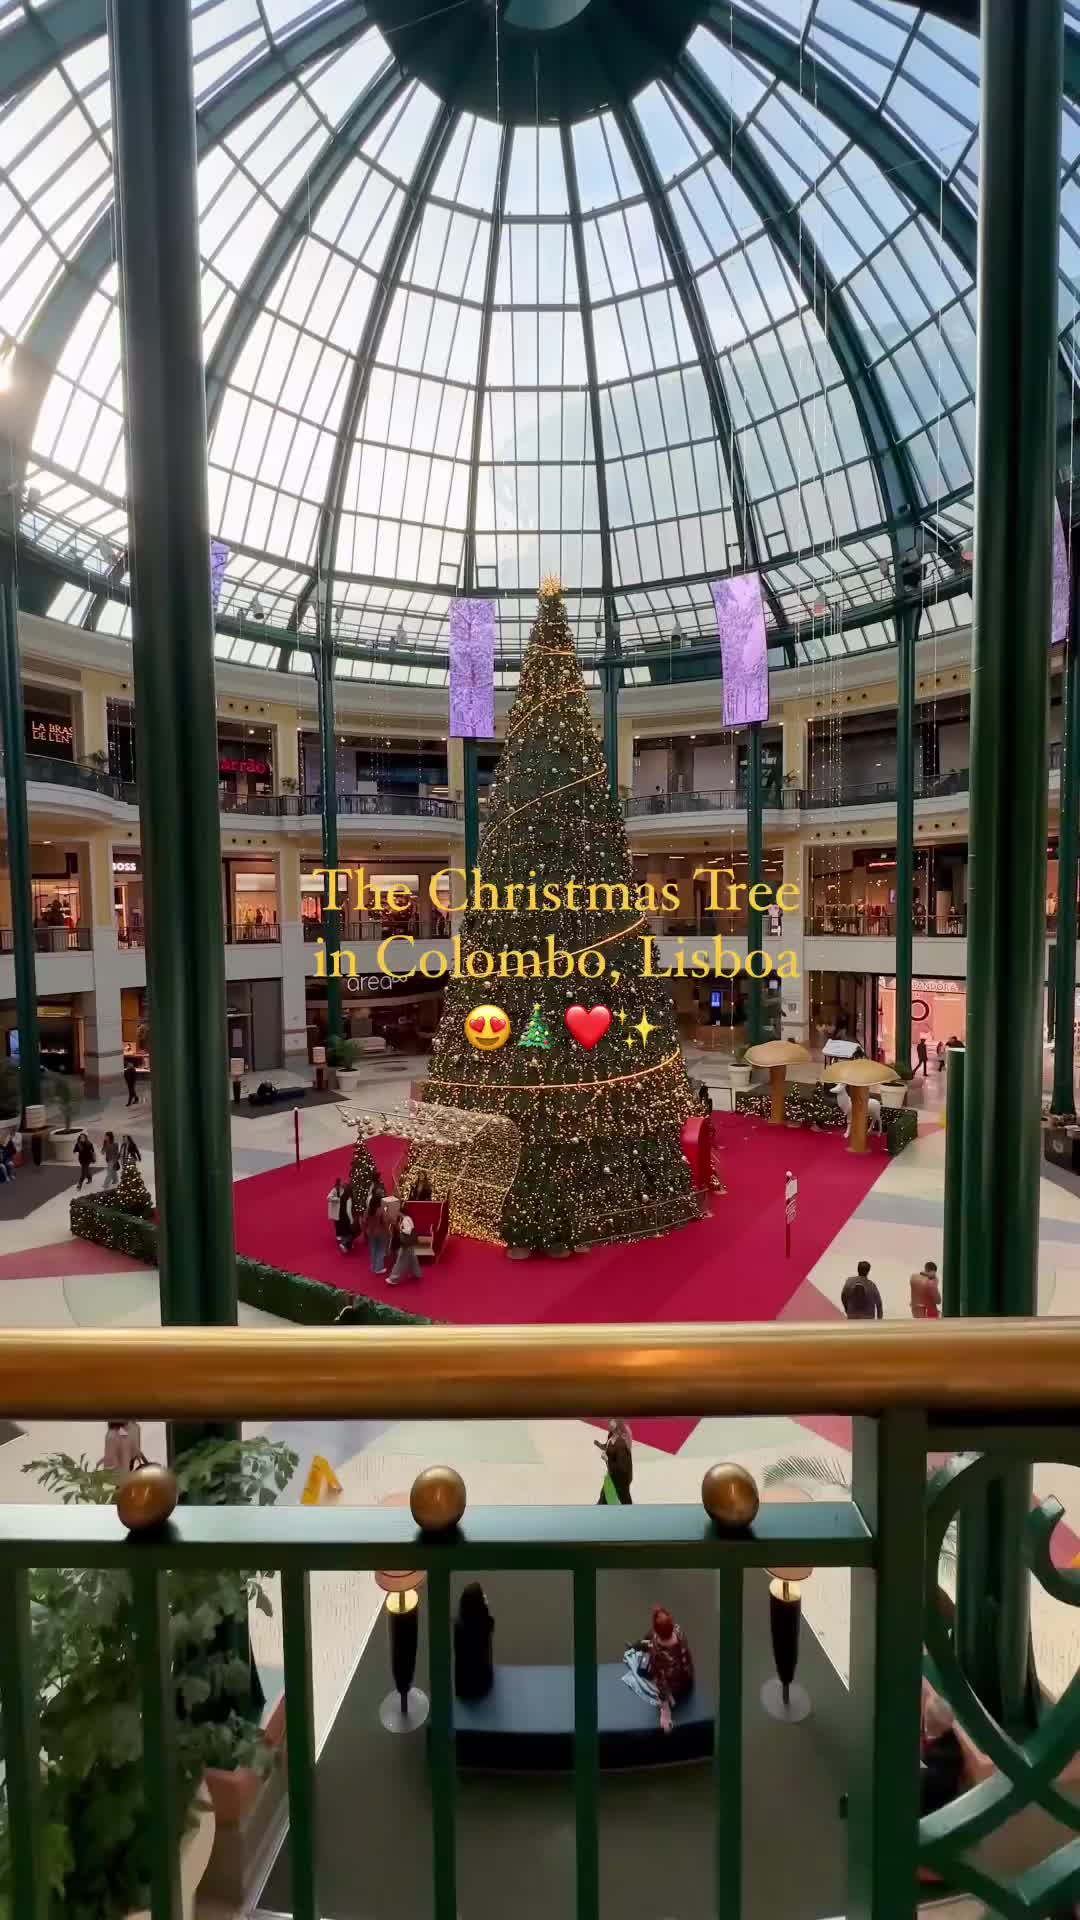 Christmas Tree in Colombo Shopping Mall, Lisbon